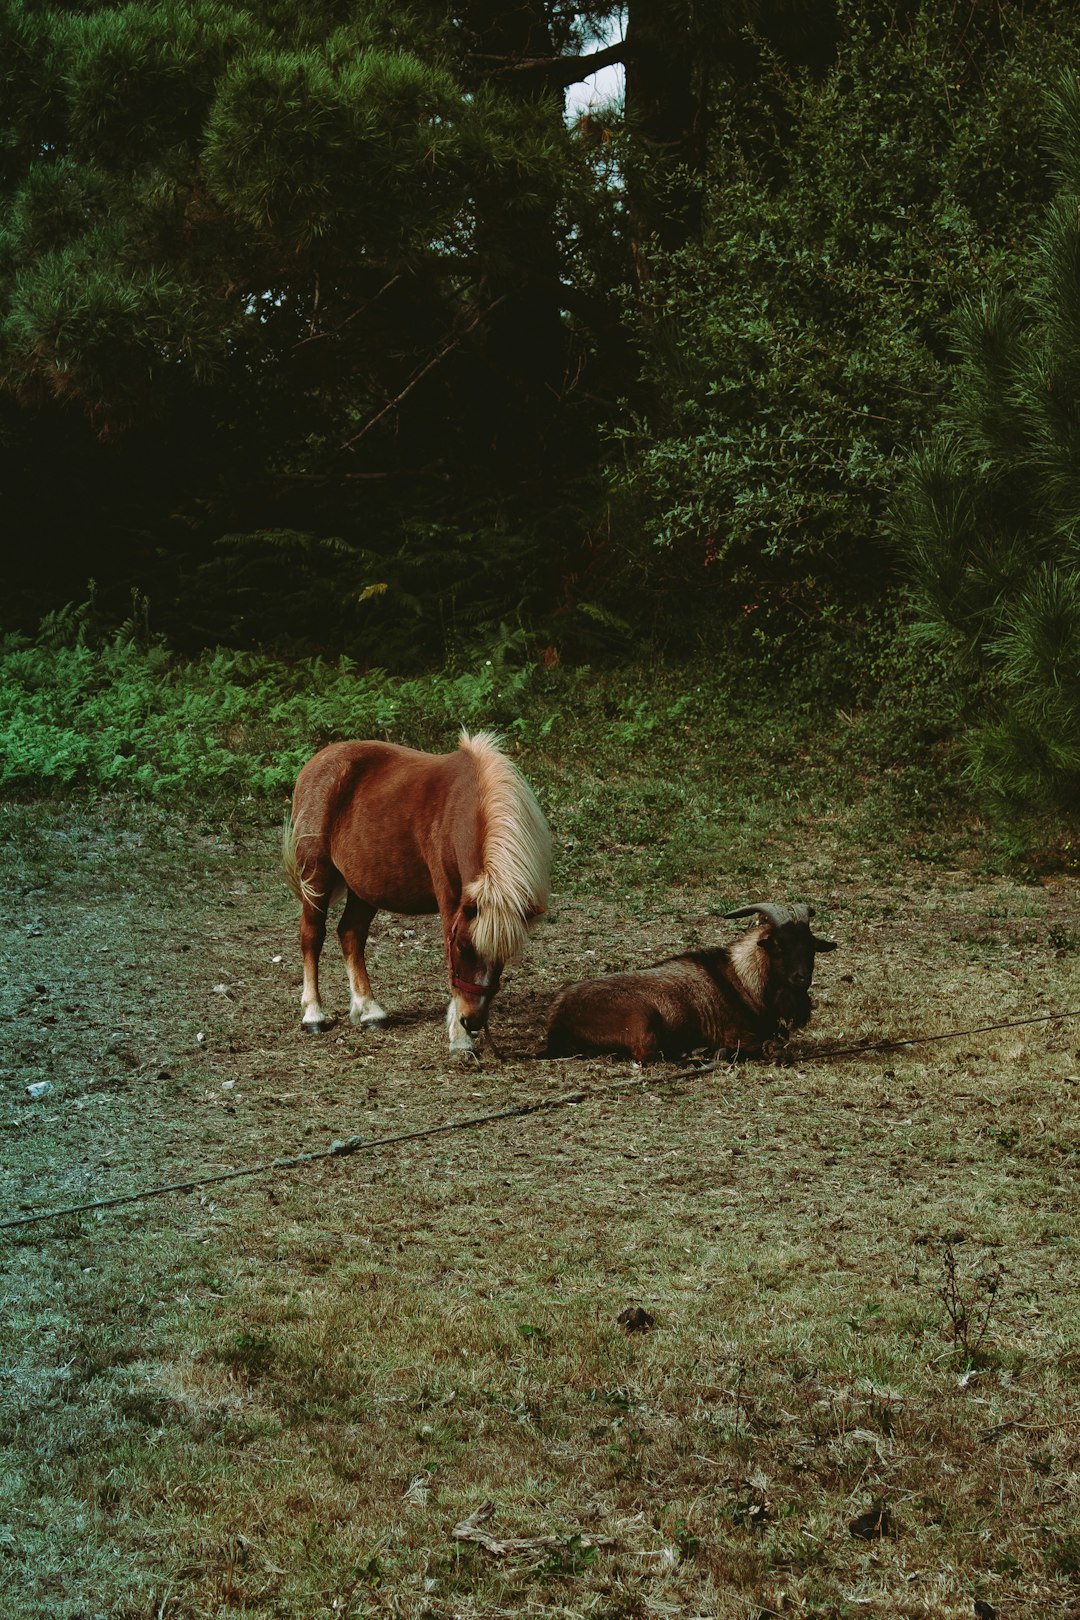 brown horse beside brown goat